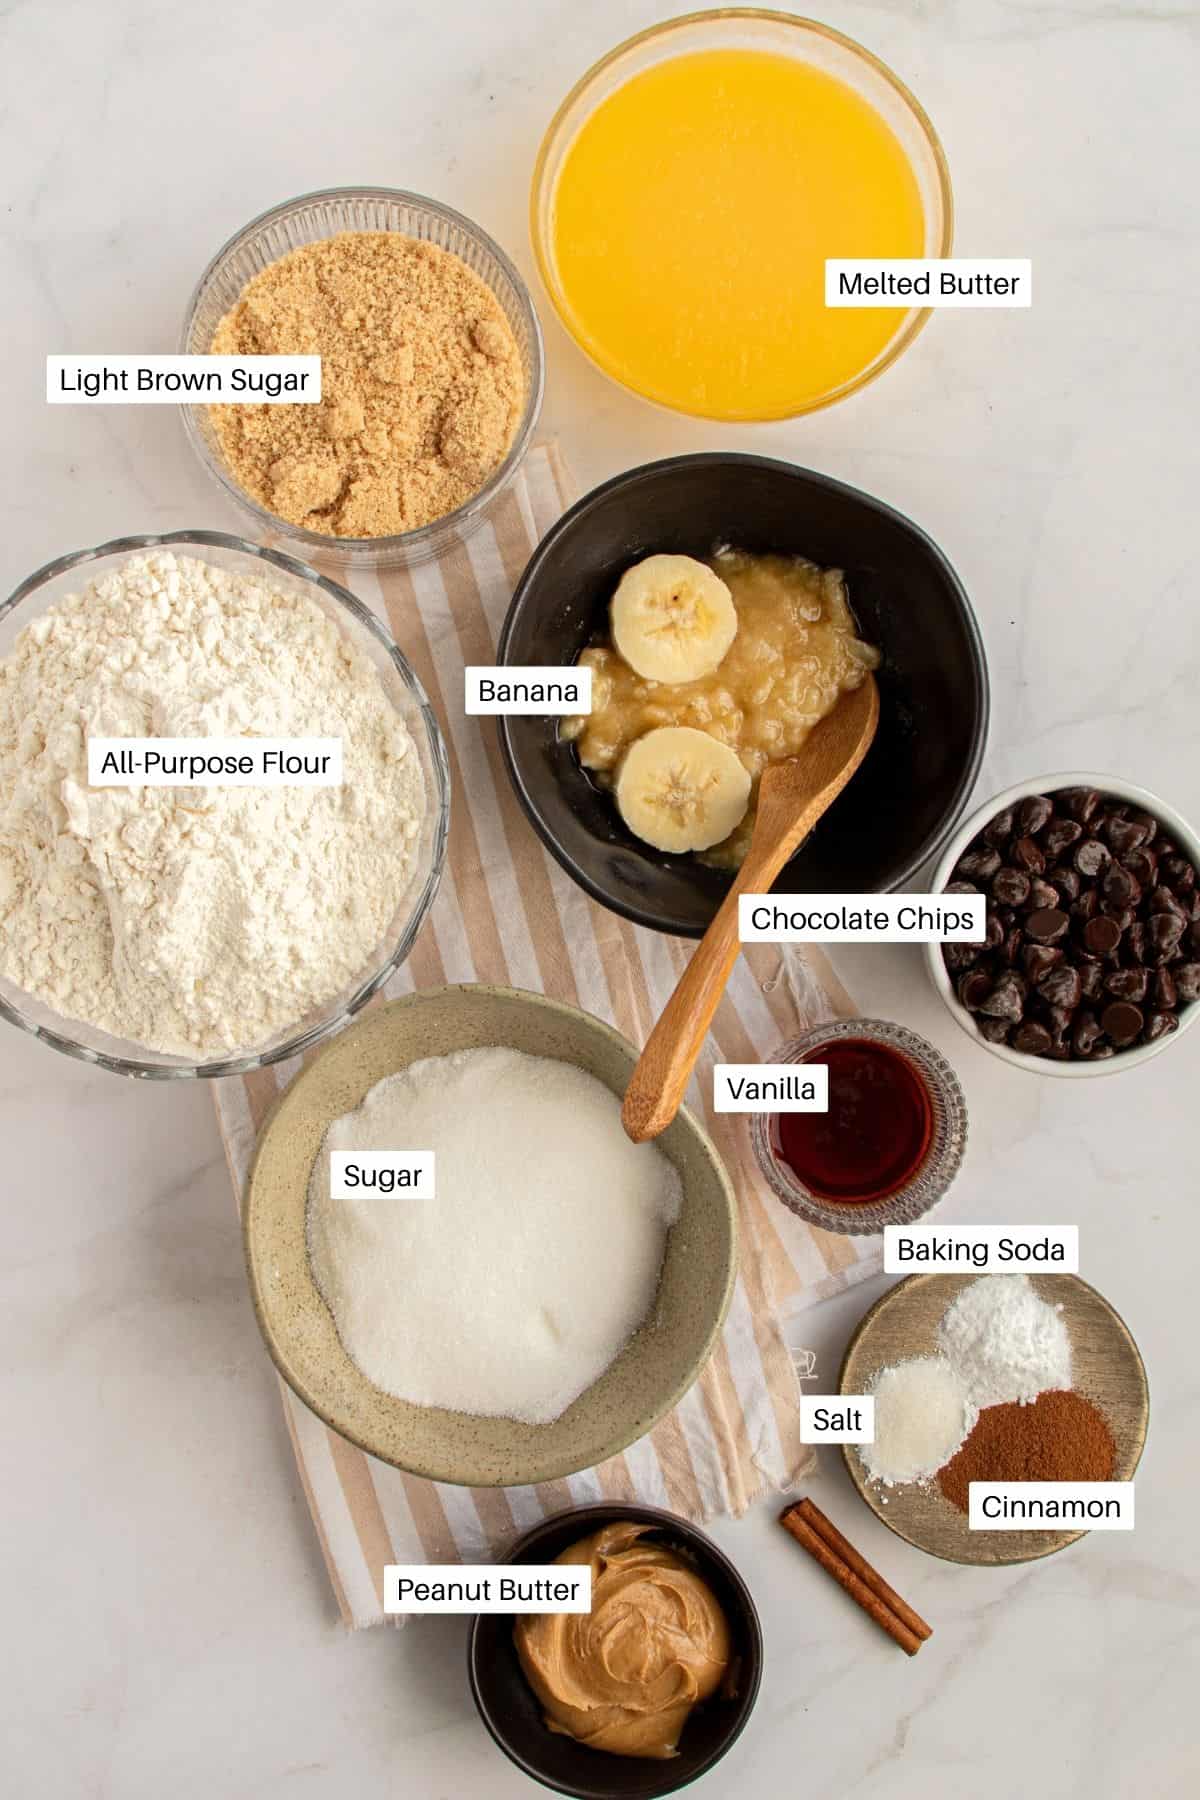 Cookie ingredients including flour, vanilla, banana, and baking soda.